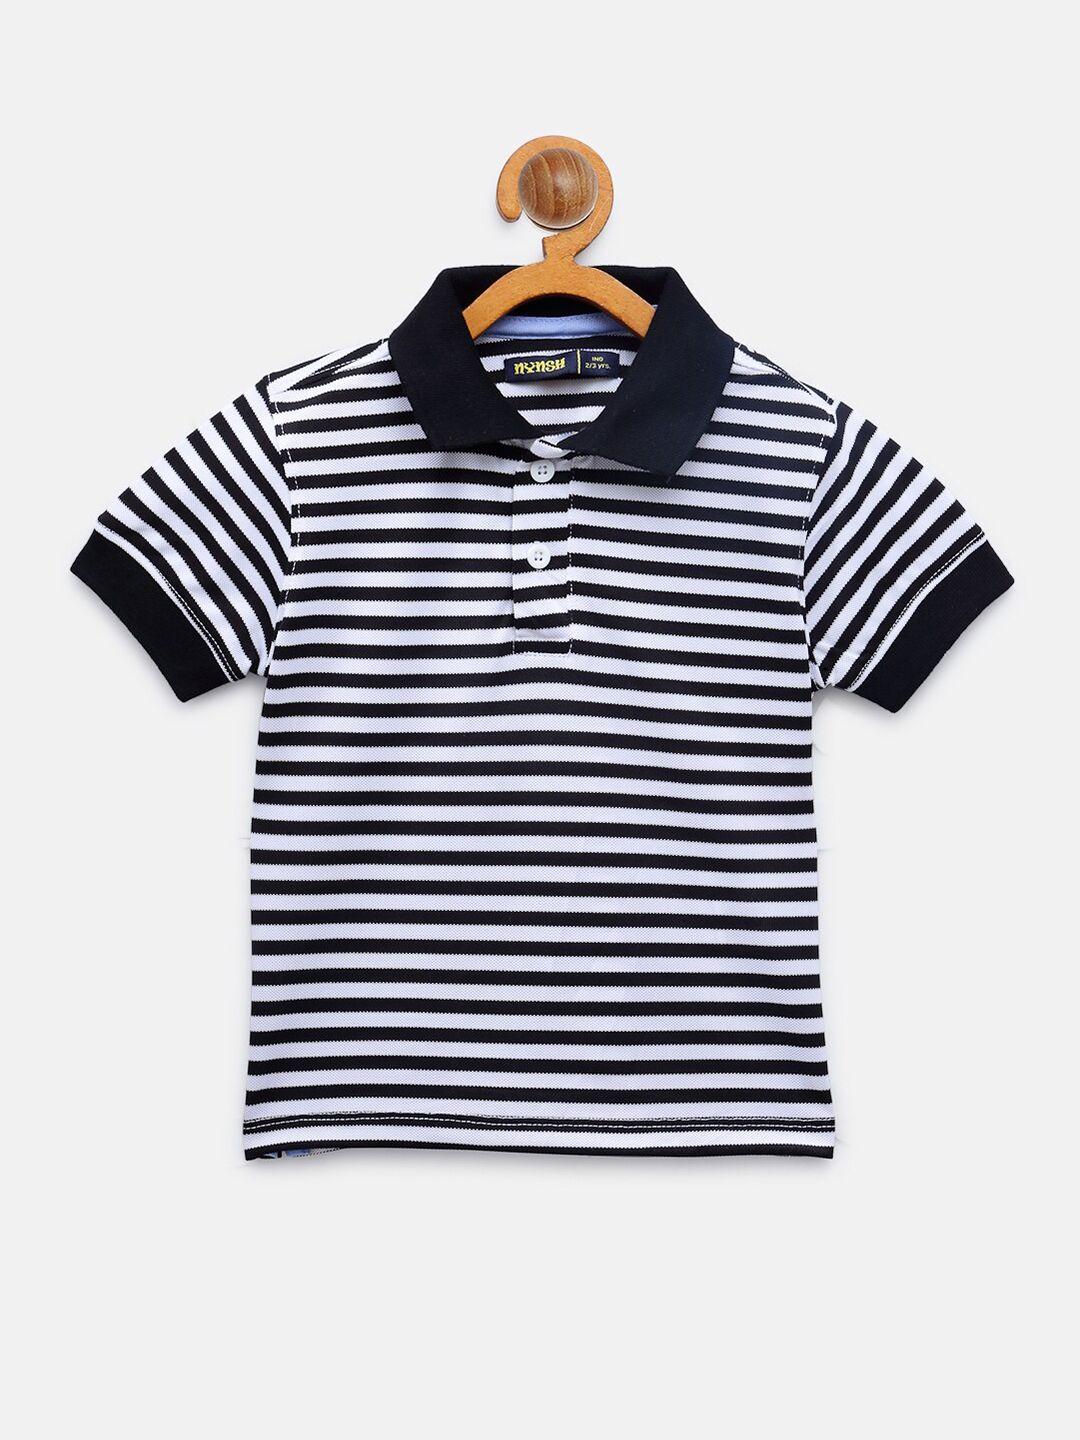 nynsh- pluss kids boys white & black striped polo collar pure cotton t-shirt